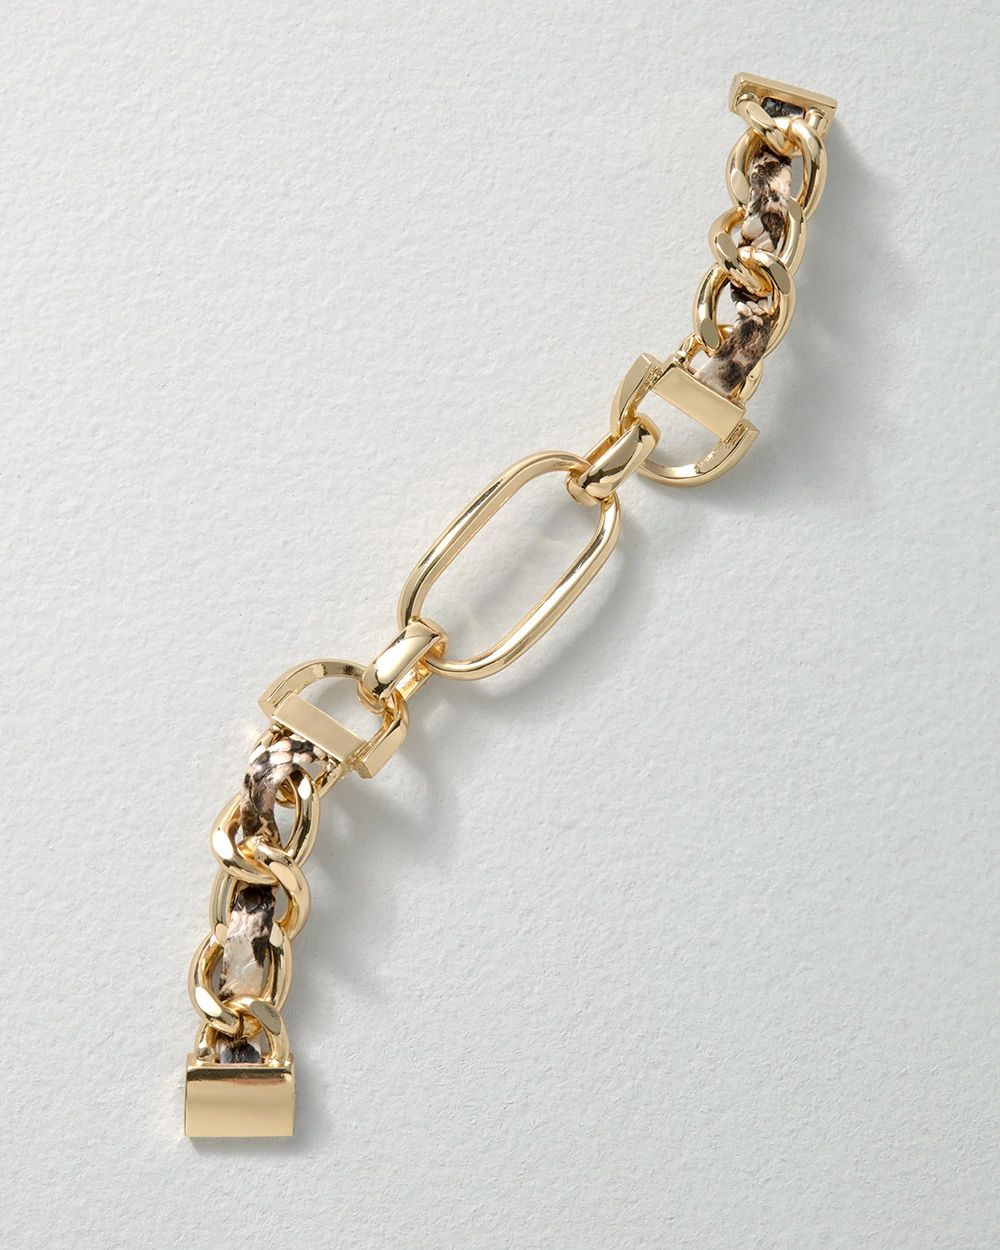 Goldtone + Leather Bracelet click to view larger image.